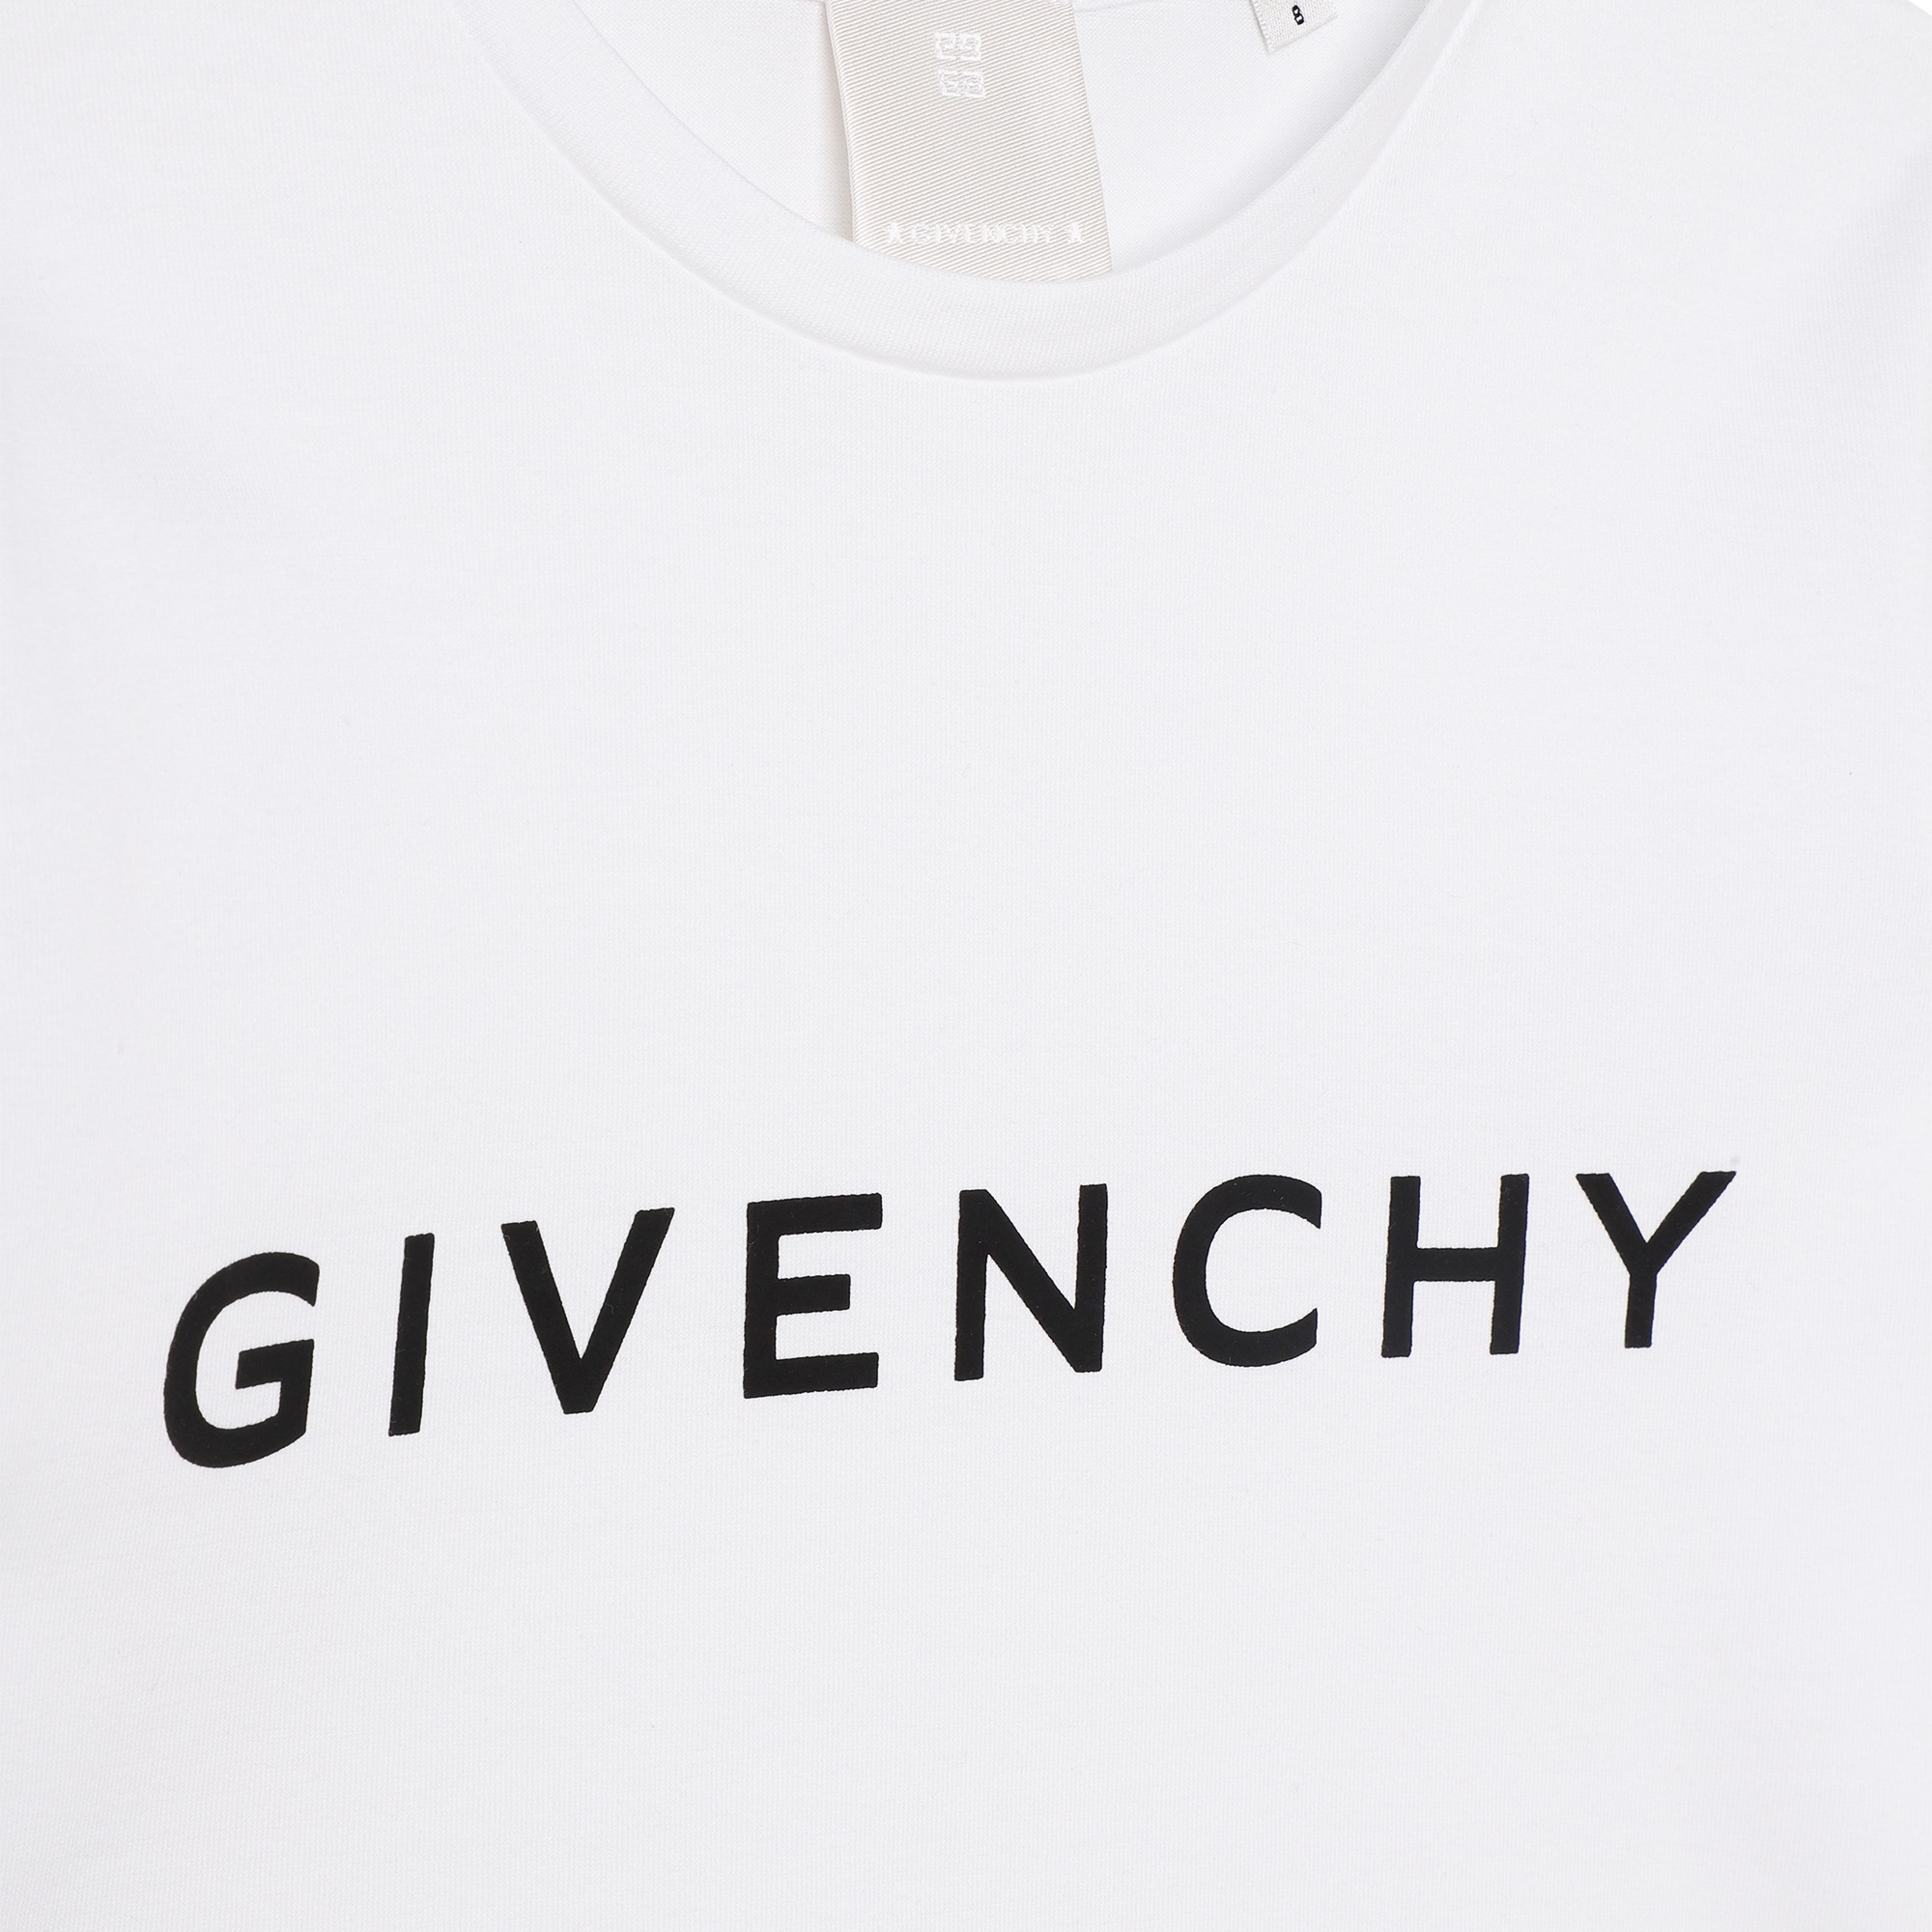 Camiseta de manga larga y logo GIVENCHY para NIÑA